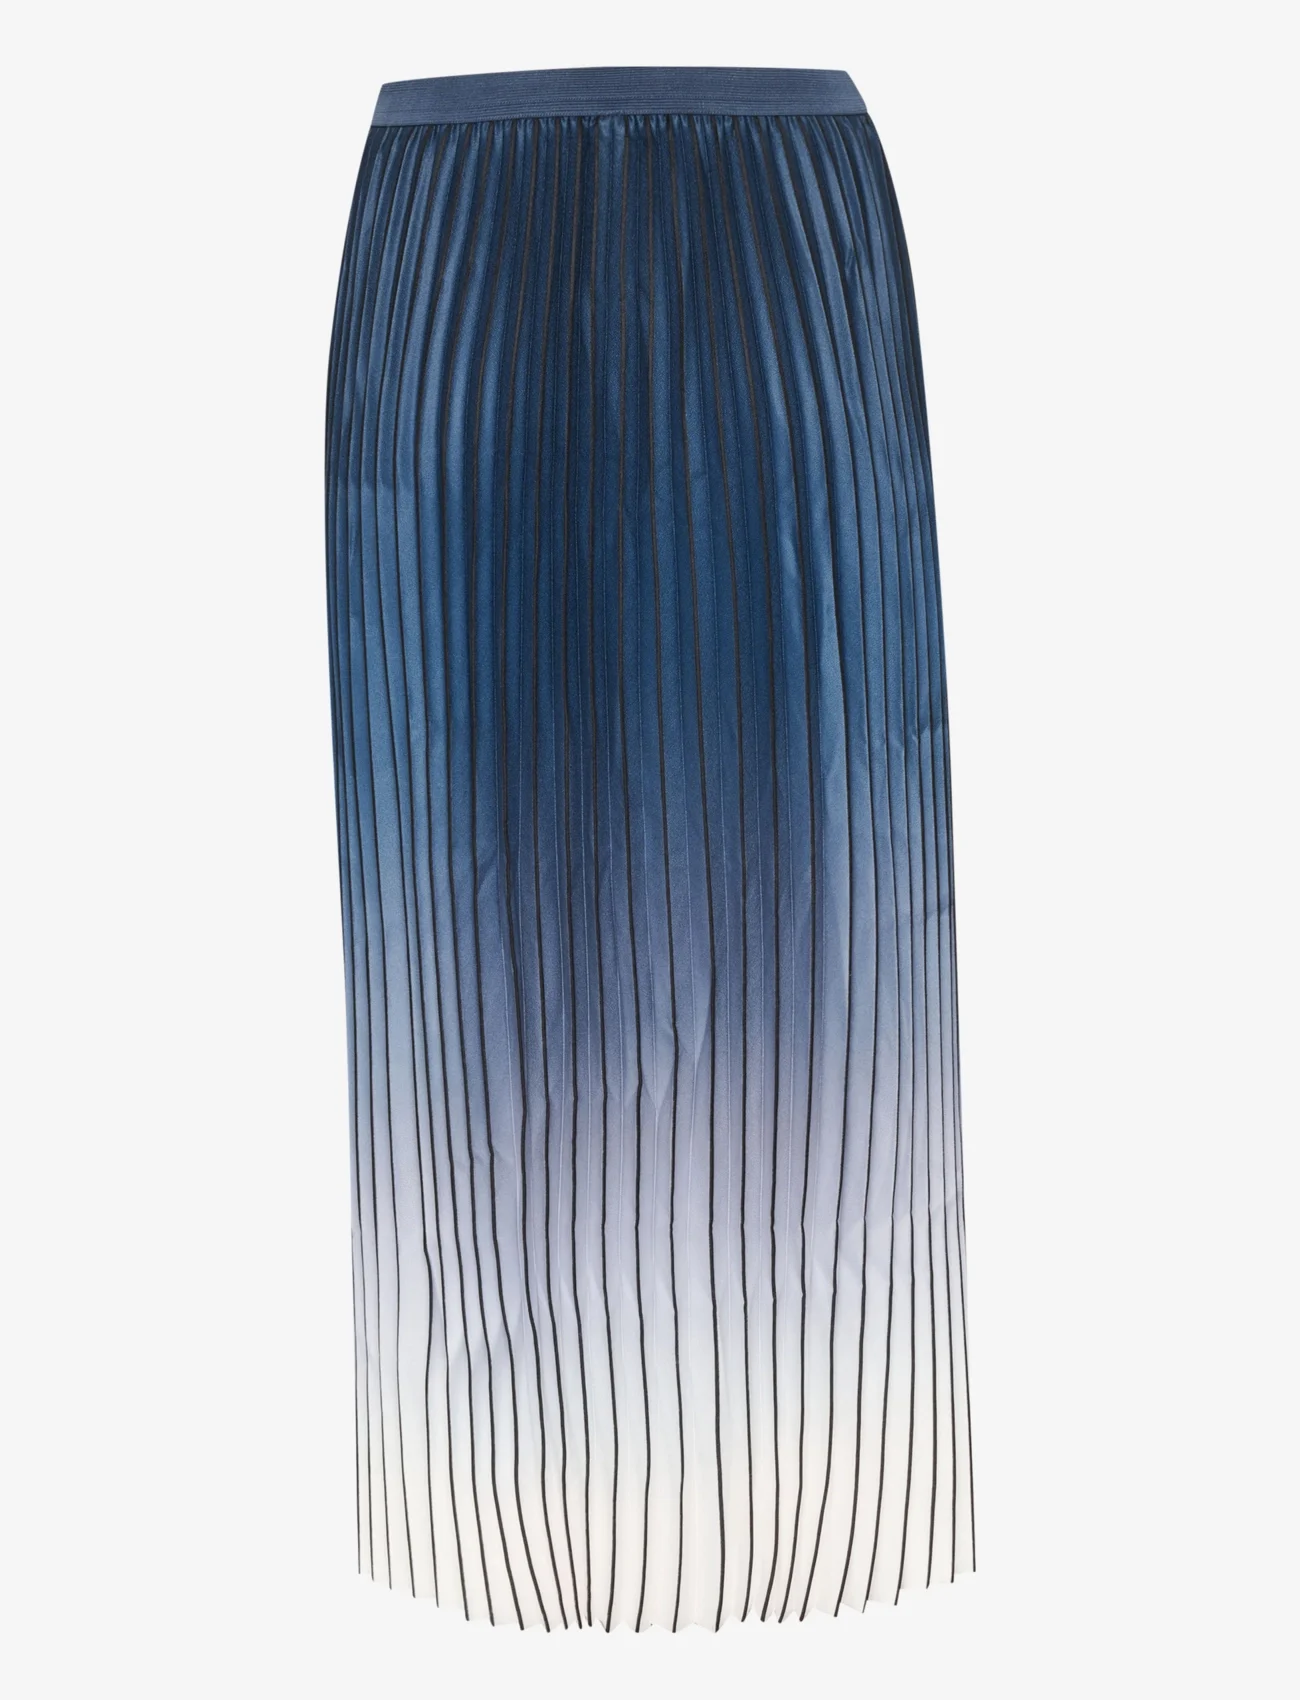 Culture - CUscarlett Ombre Skirt - pleated skirts - dress blues - 1